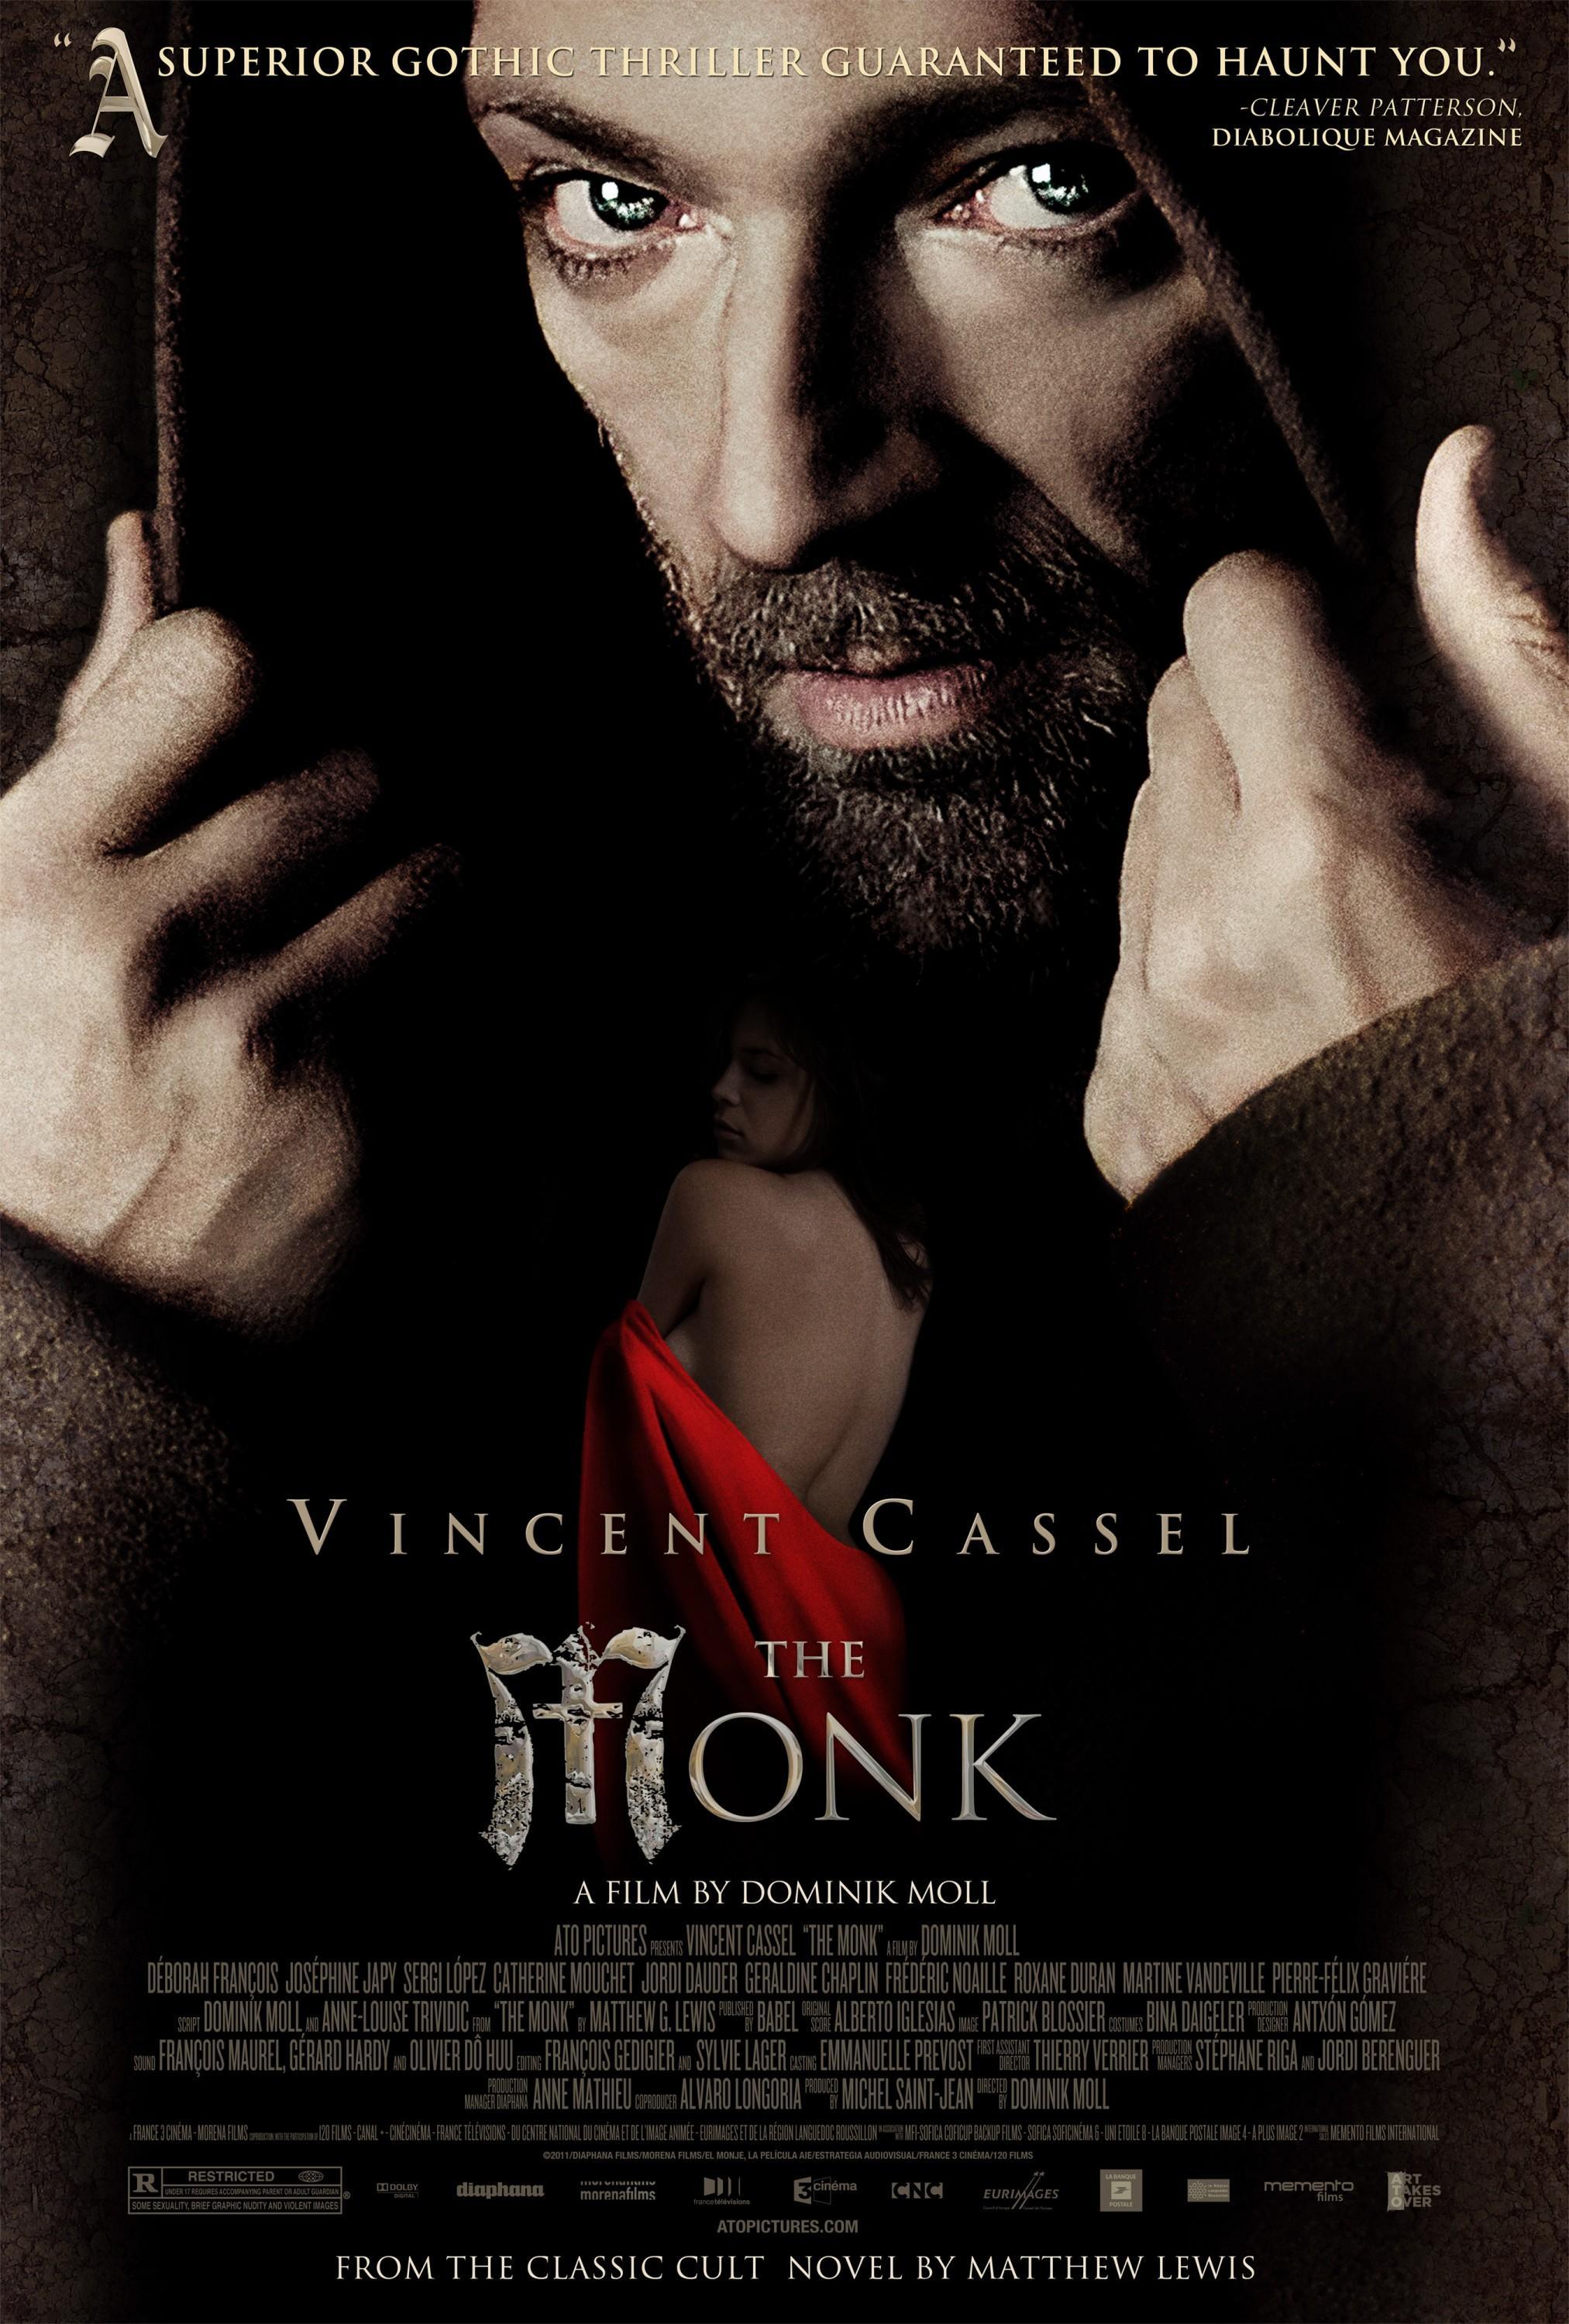 Постер фильма Монах | moine